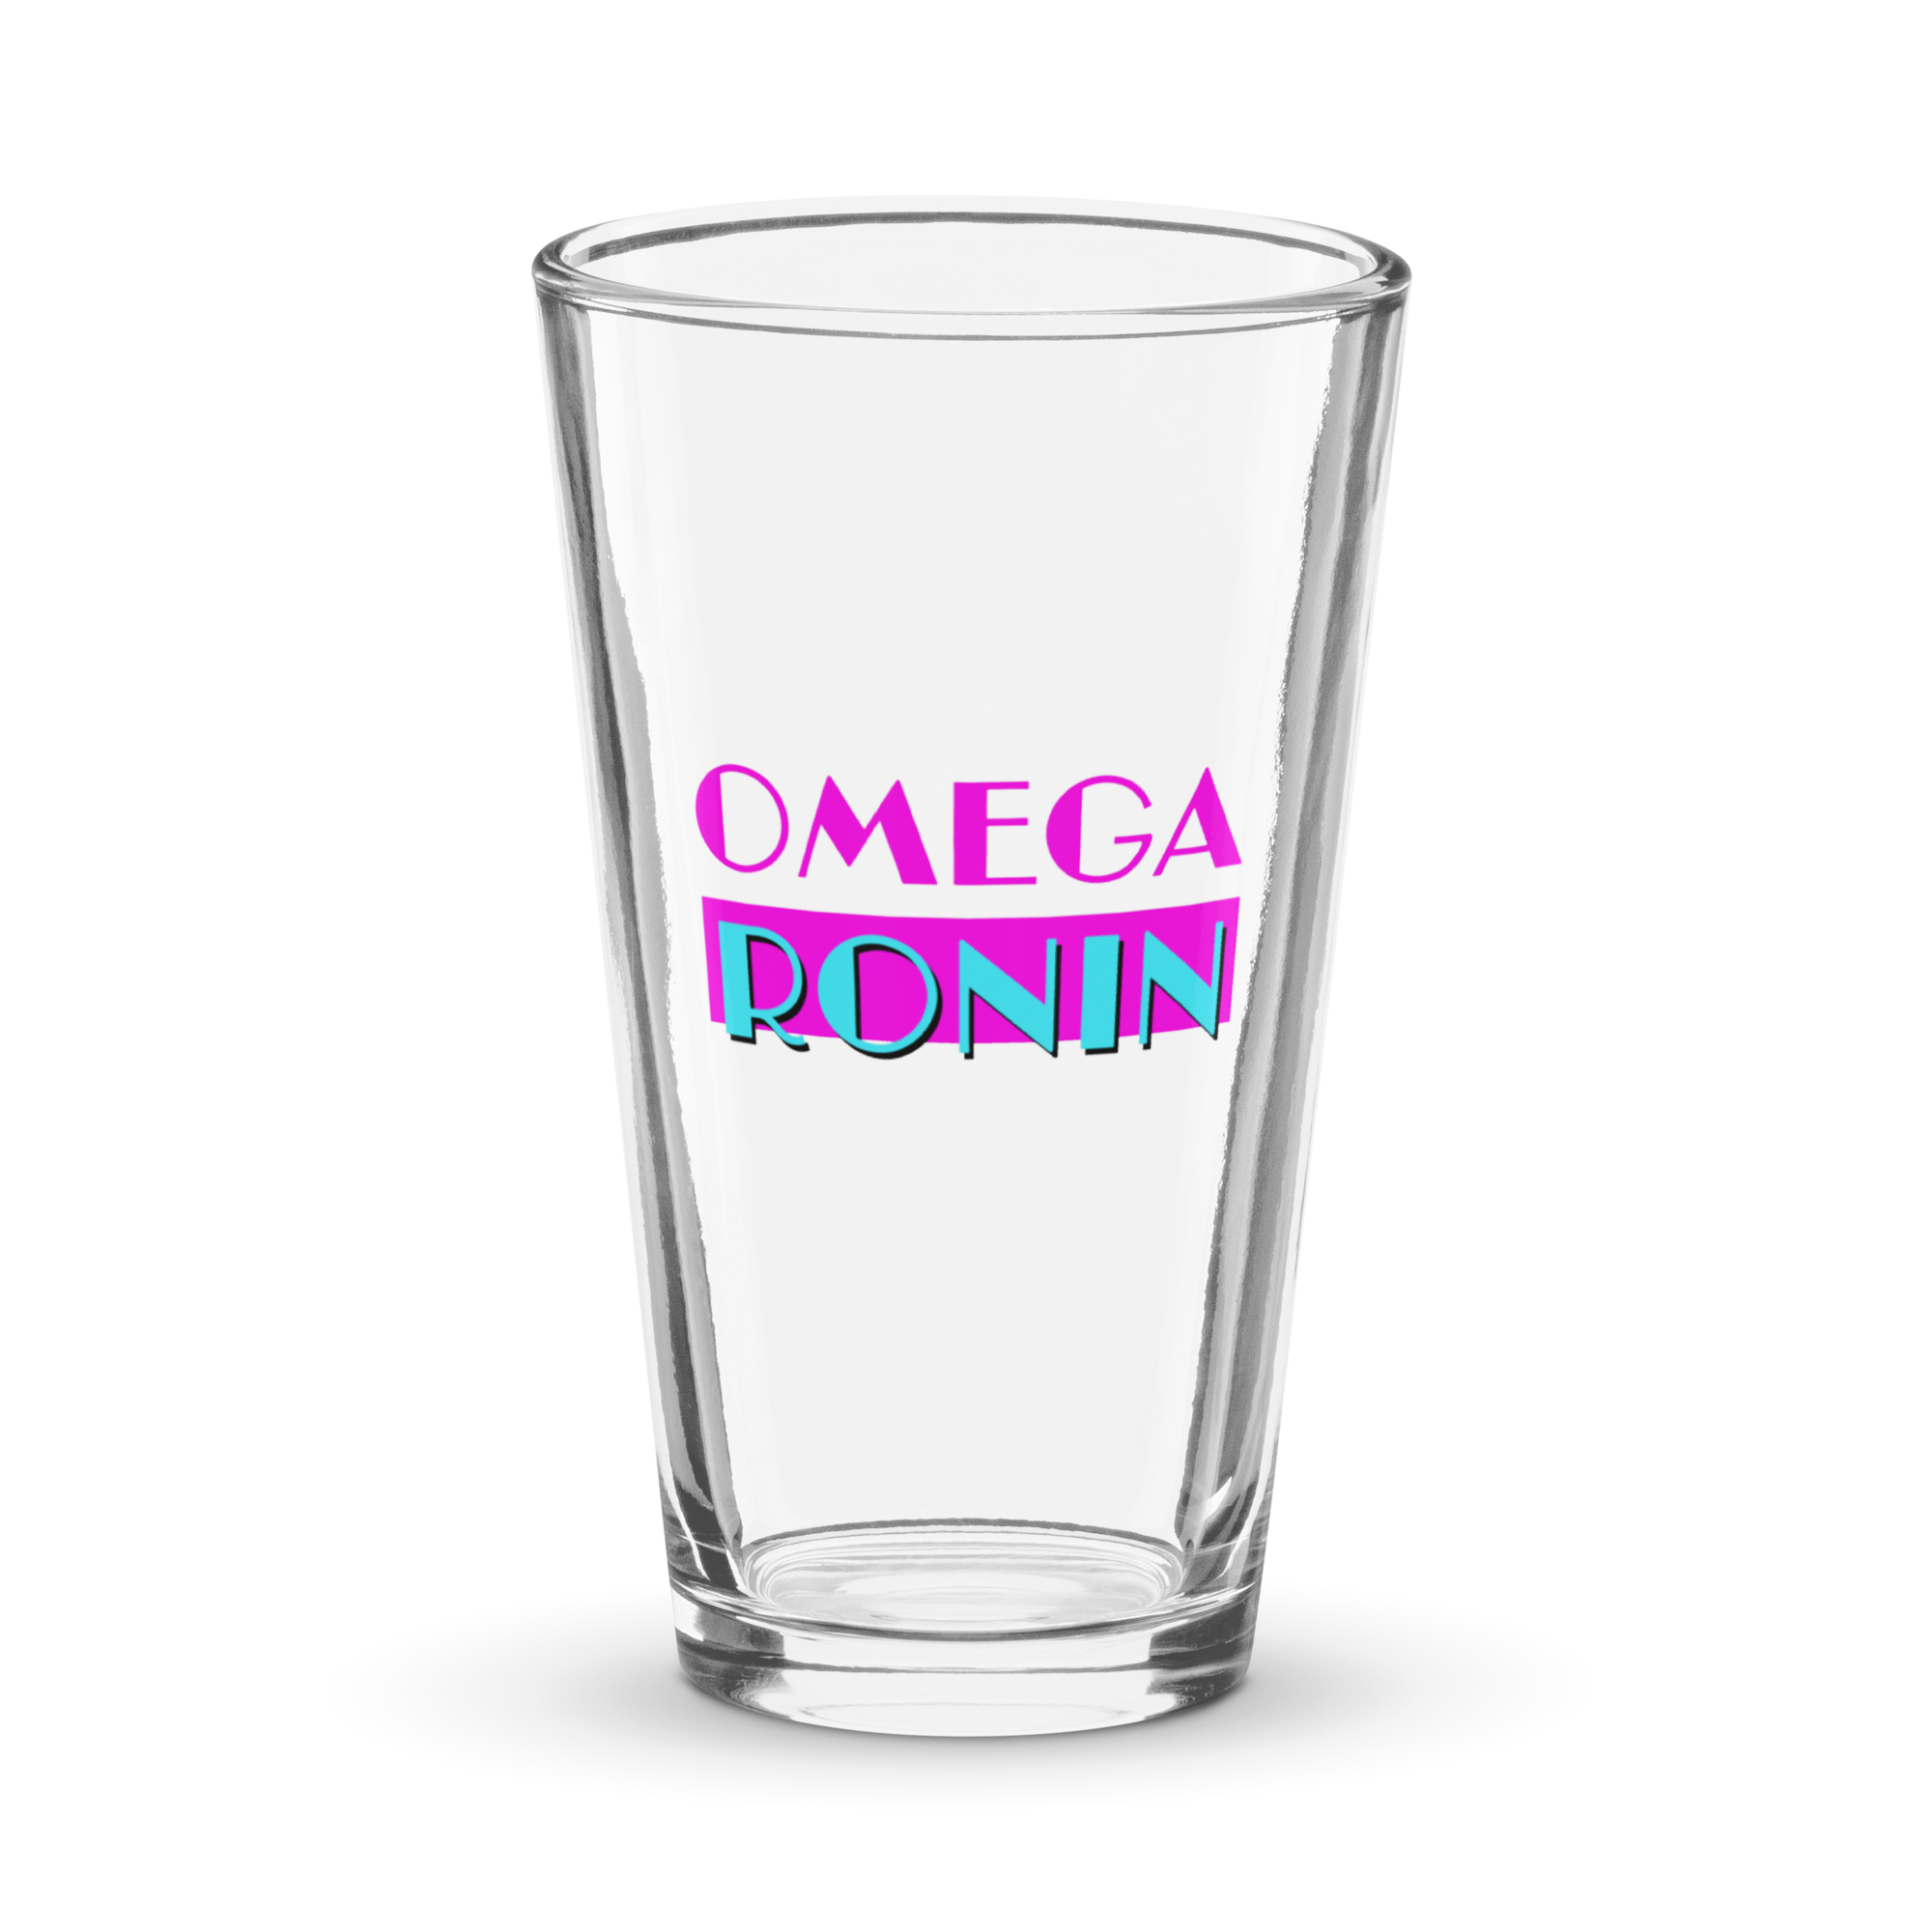 Omega Ronin Retro Miami Pint Glass